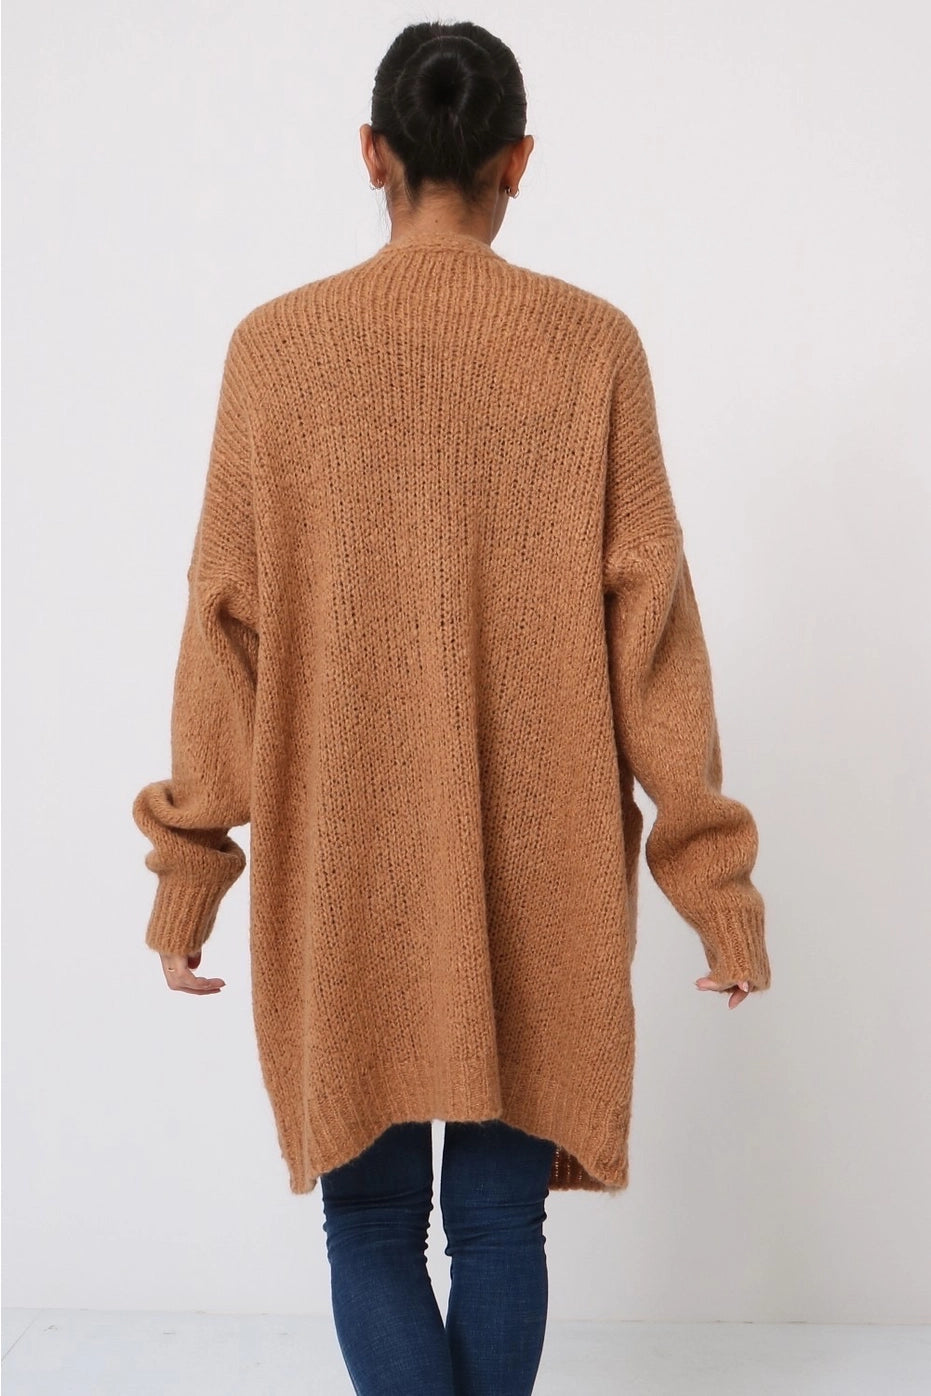 Long knit sweater